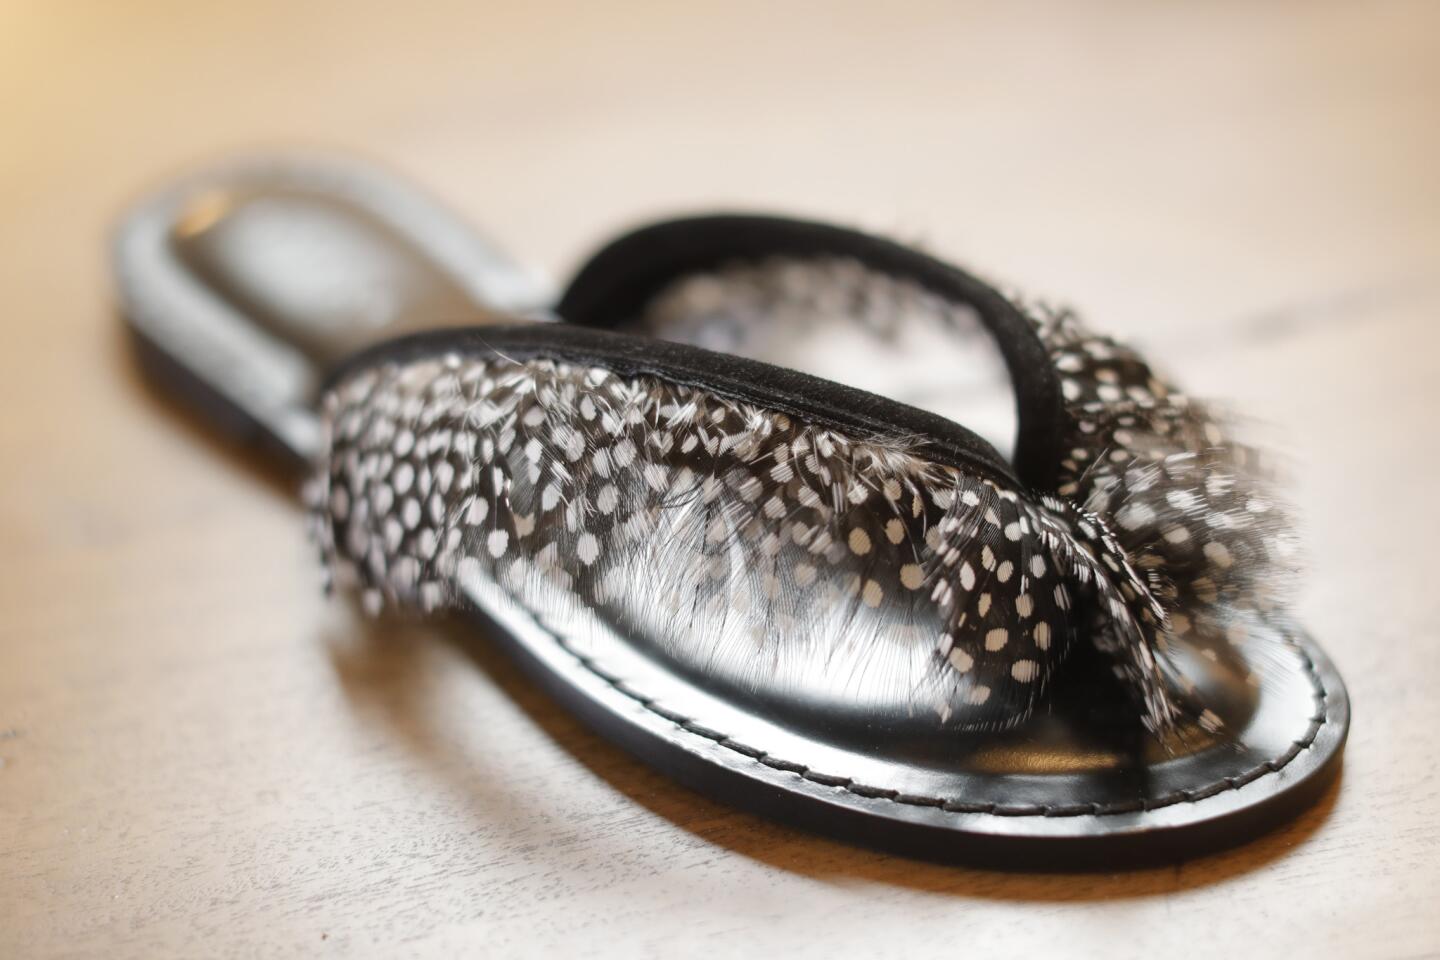 A closer look at custom sandal label Amanu